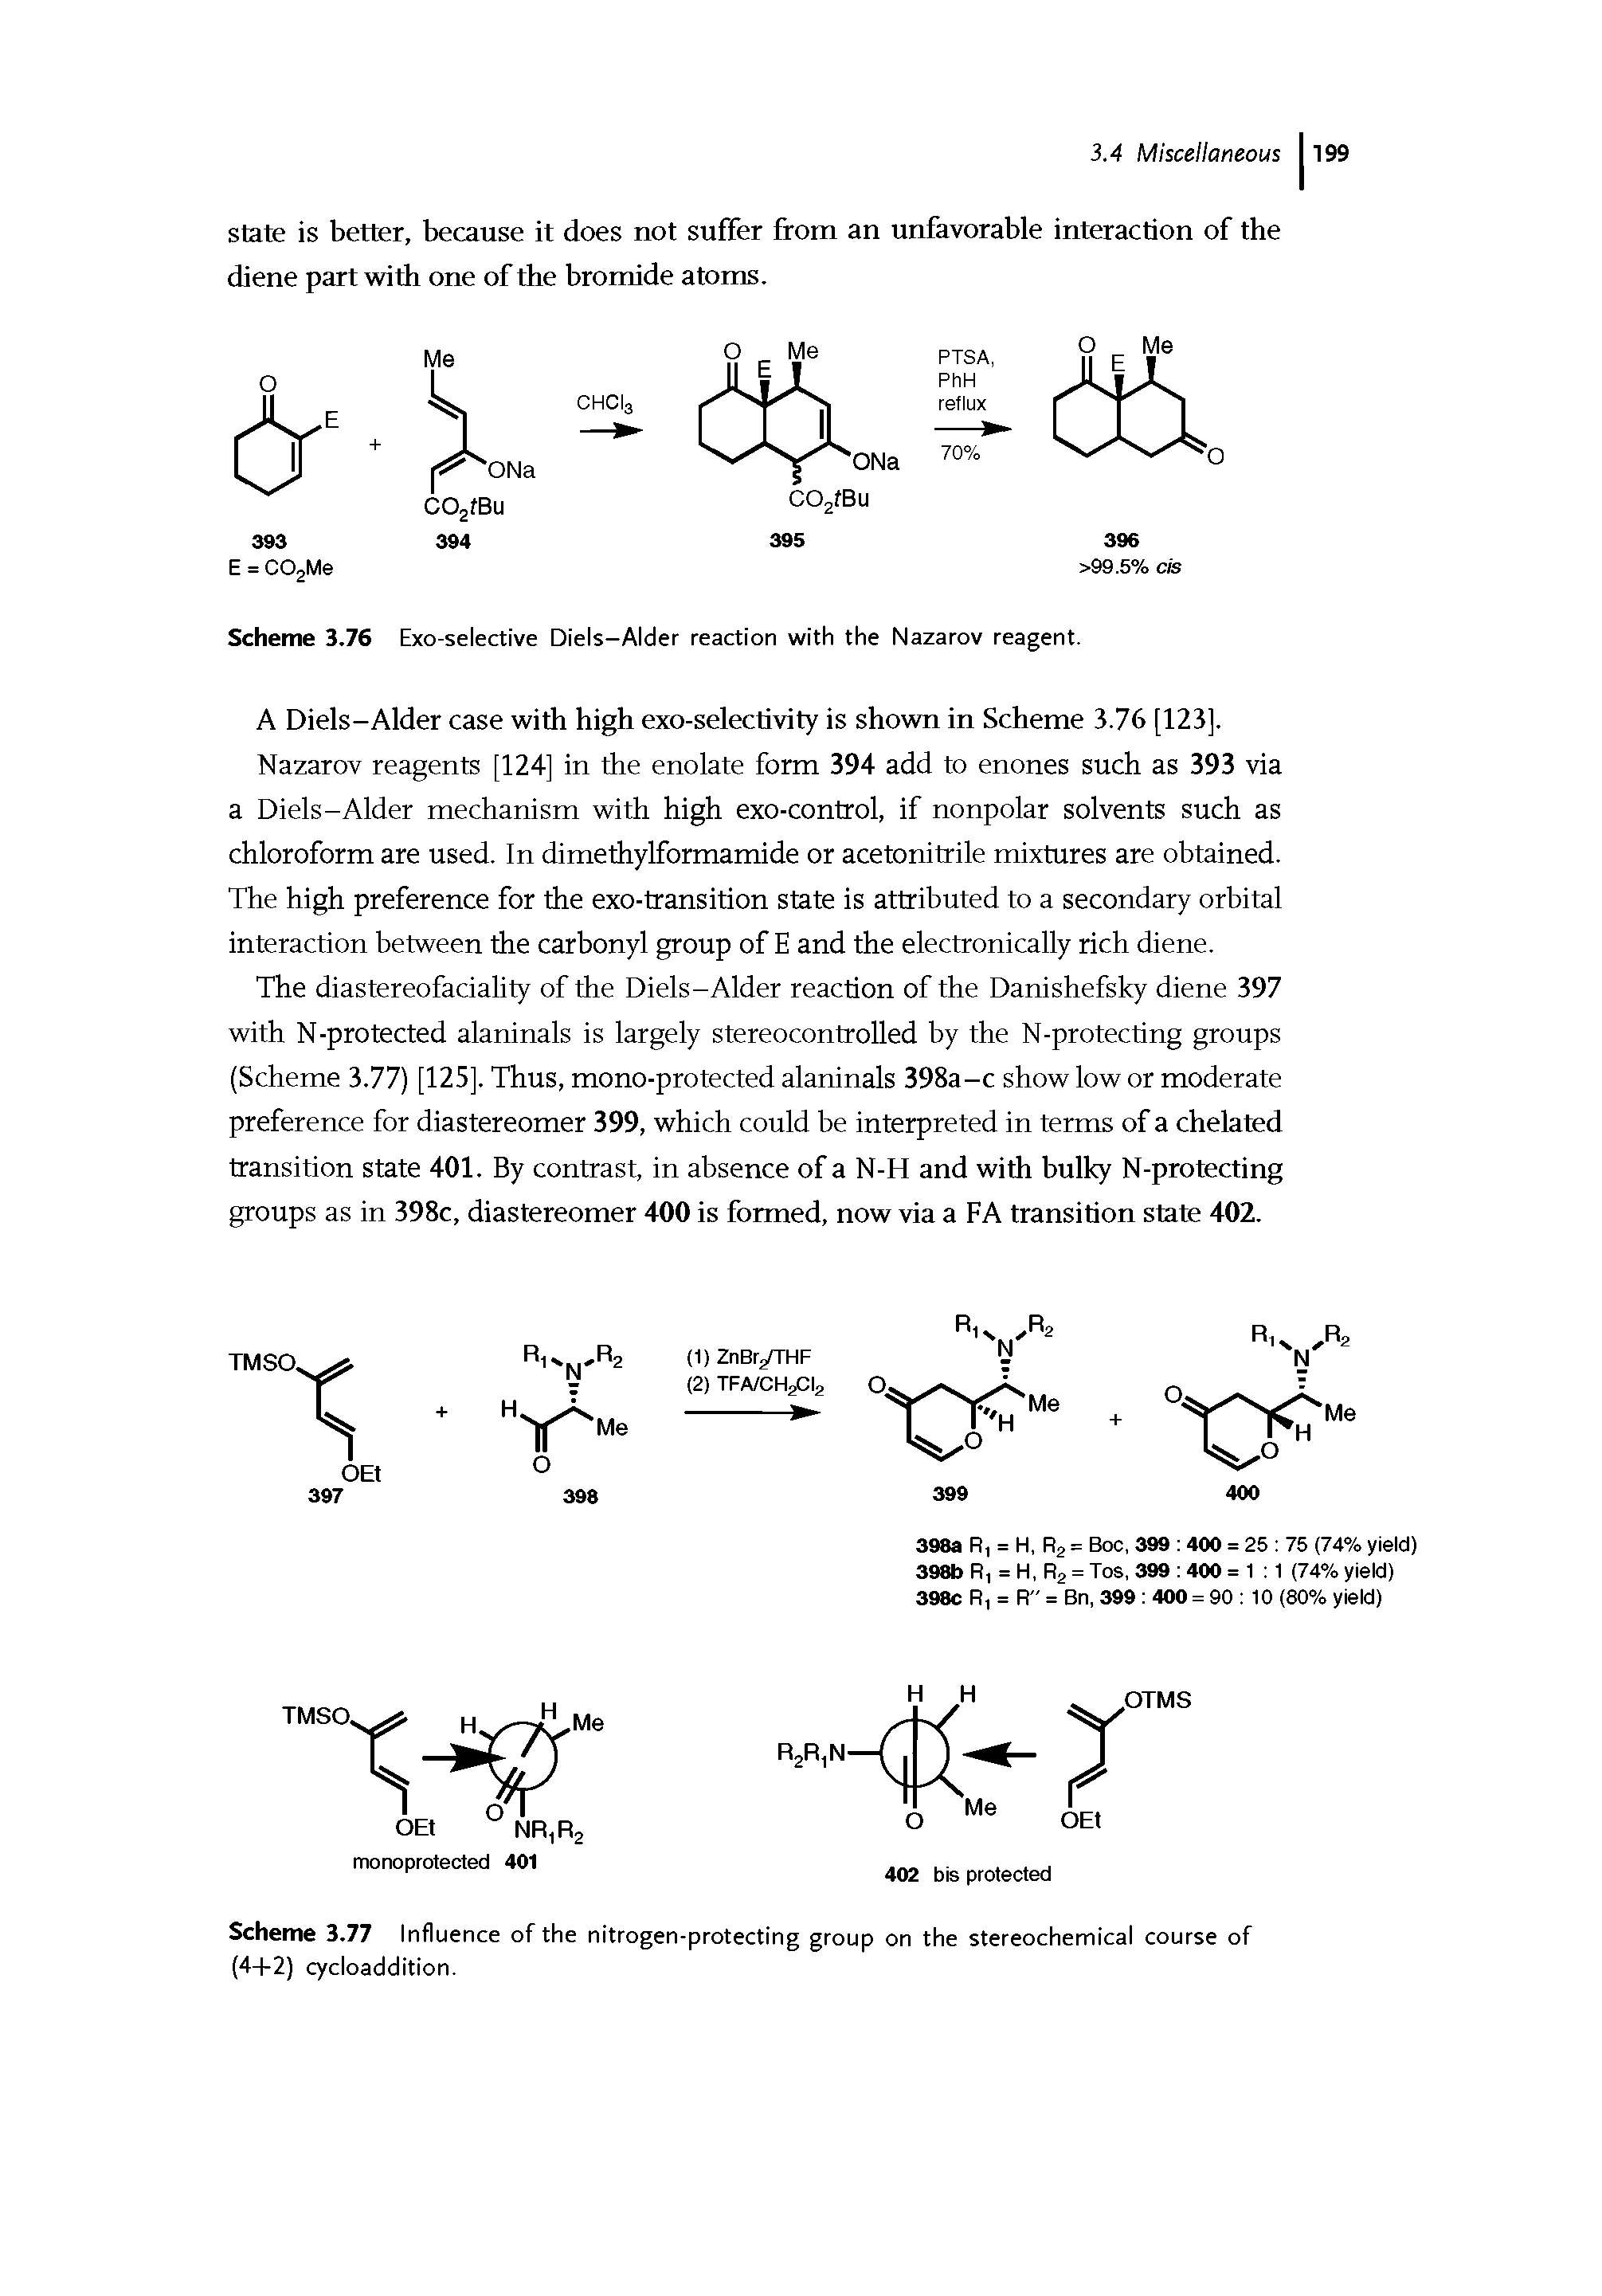 Scheme 3.76 Exo-selective Diels-Alder reaction with the Nazarov reagent.